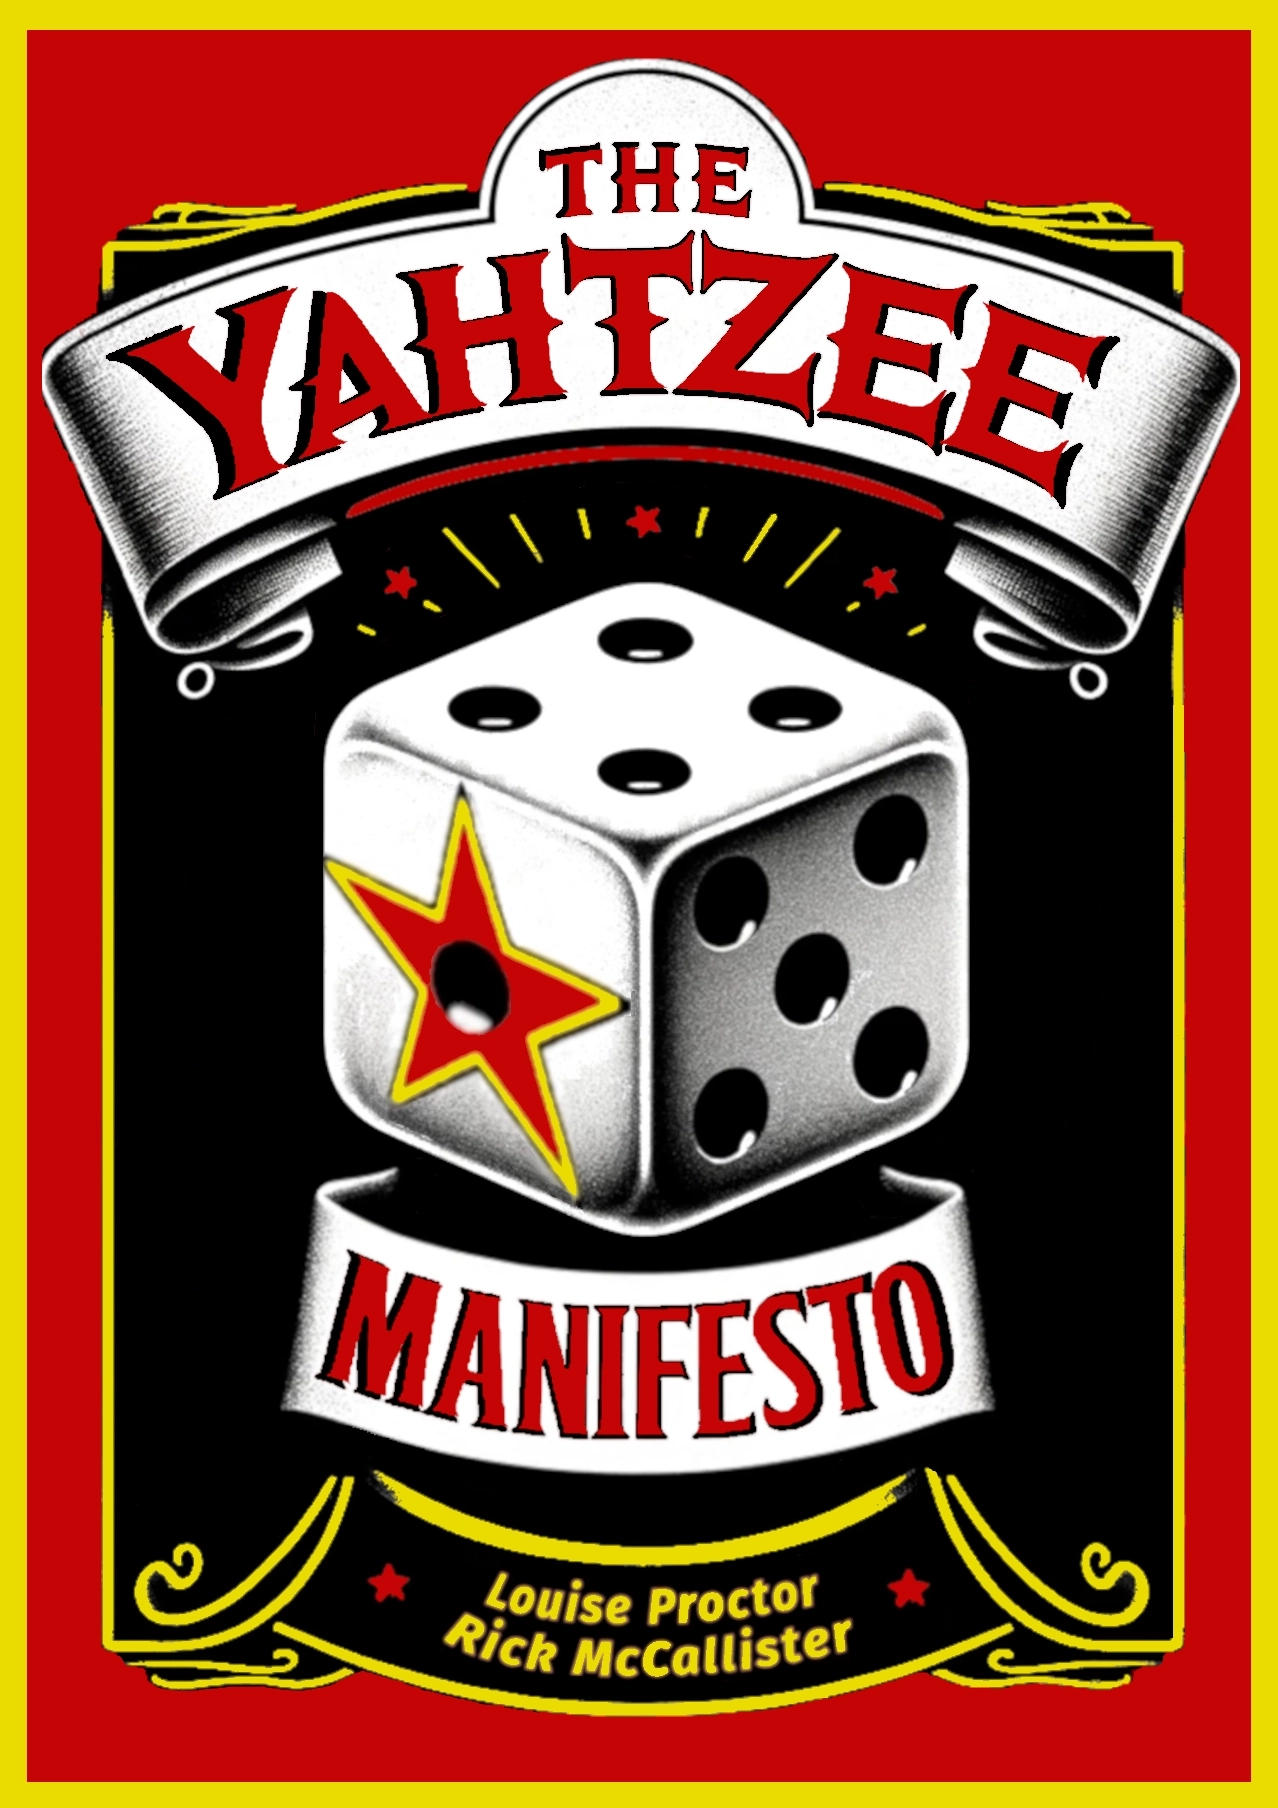 The Yahtzee Manifesto front cover